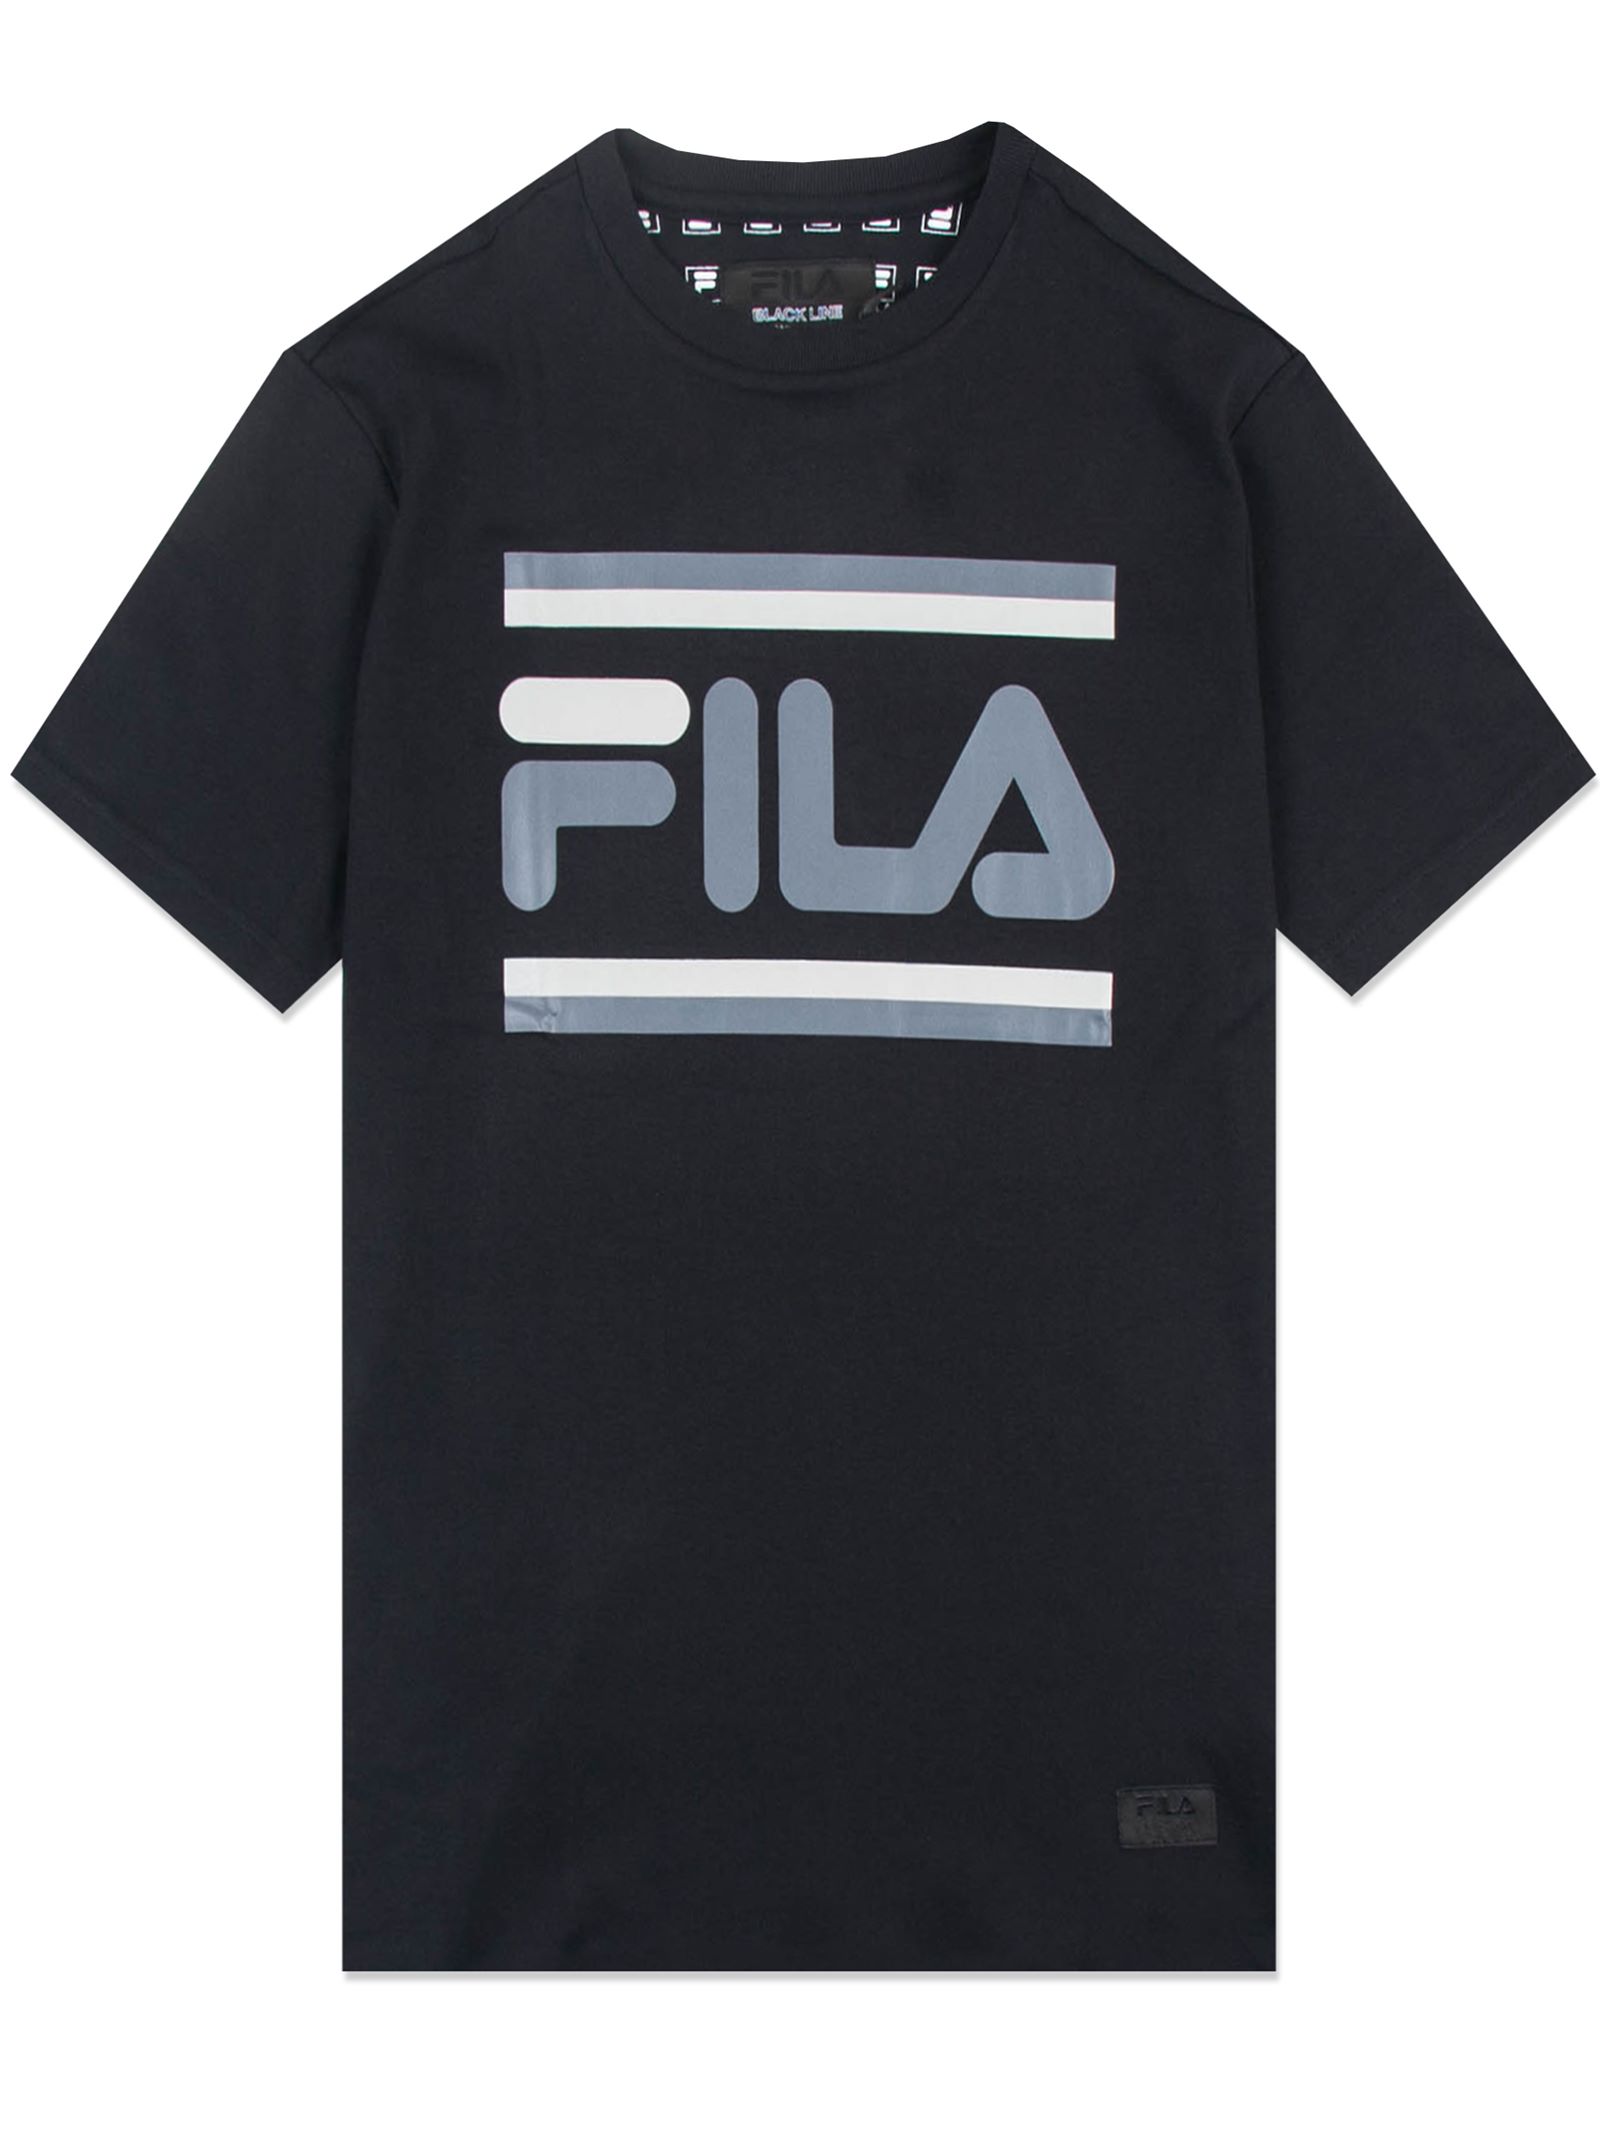 FILA Vialli Graphic T-Shirt | Dapper Street